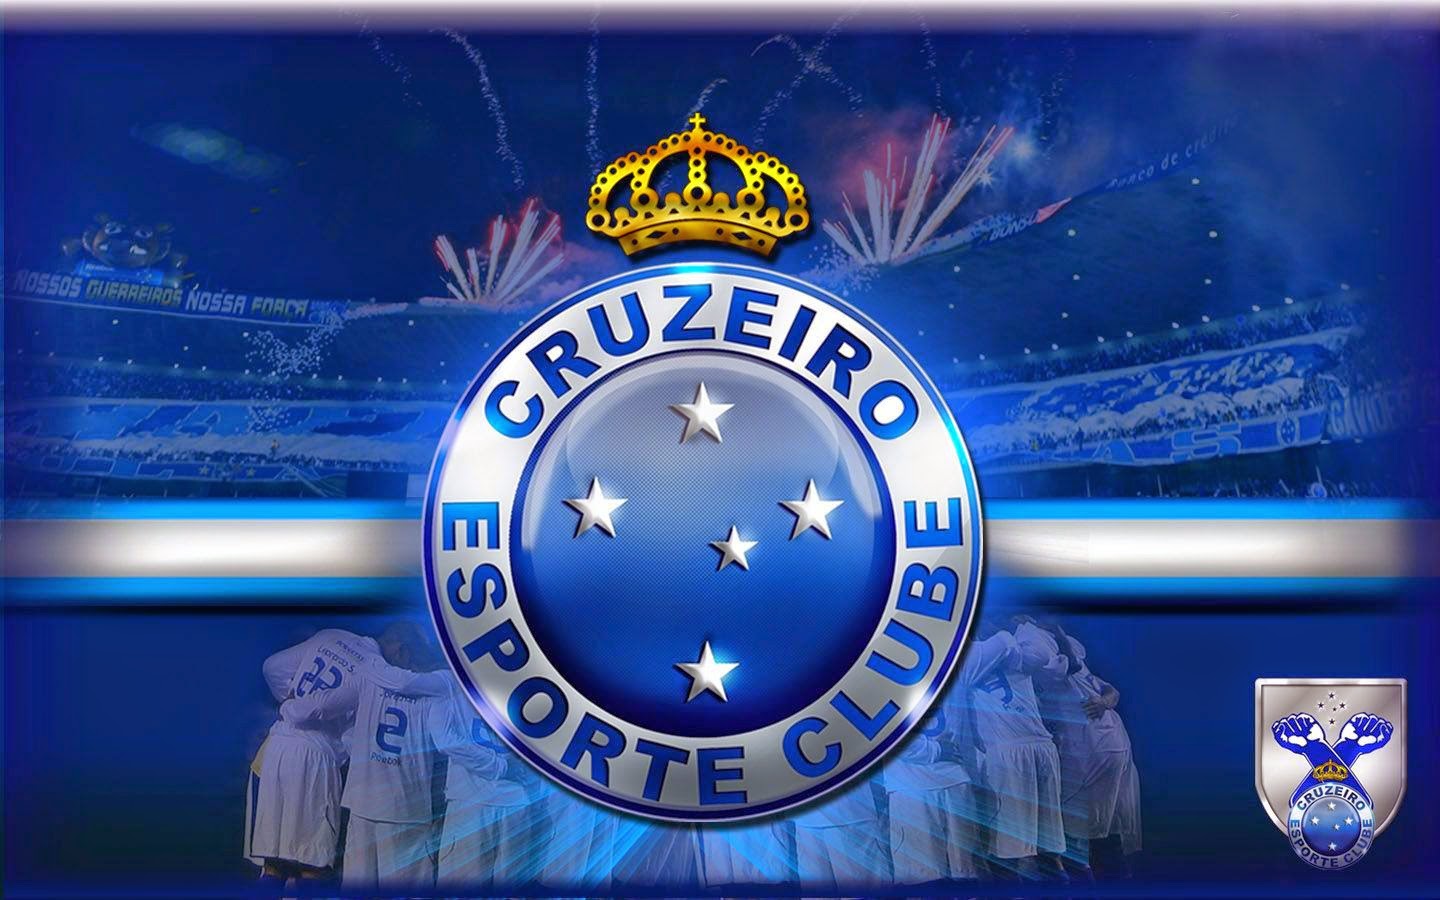 Cruzeiro Wallpaper In HD For Desktop Or Gadget